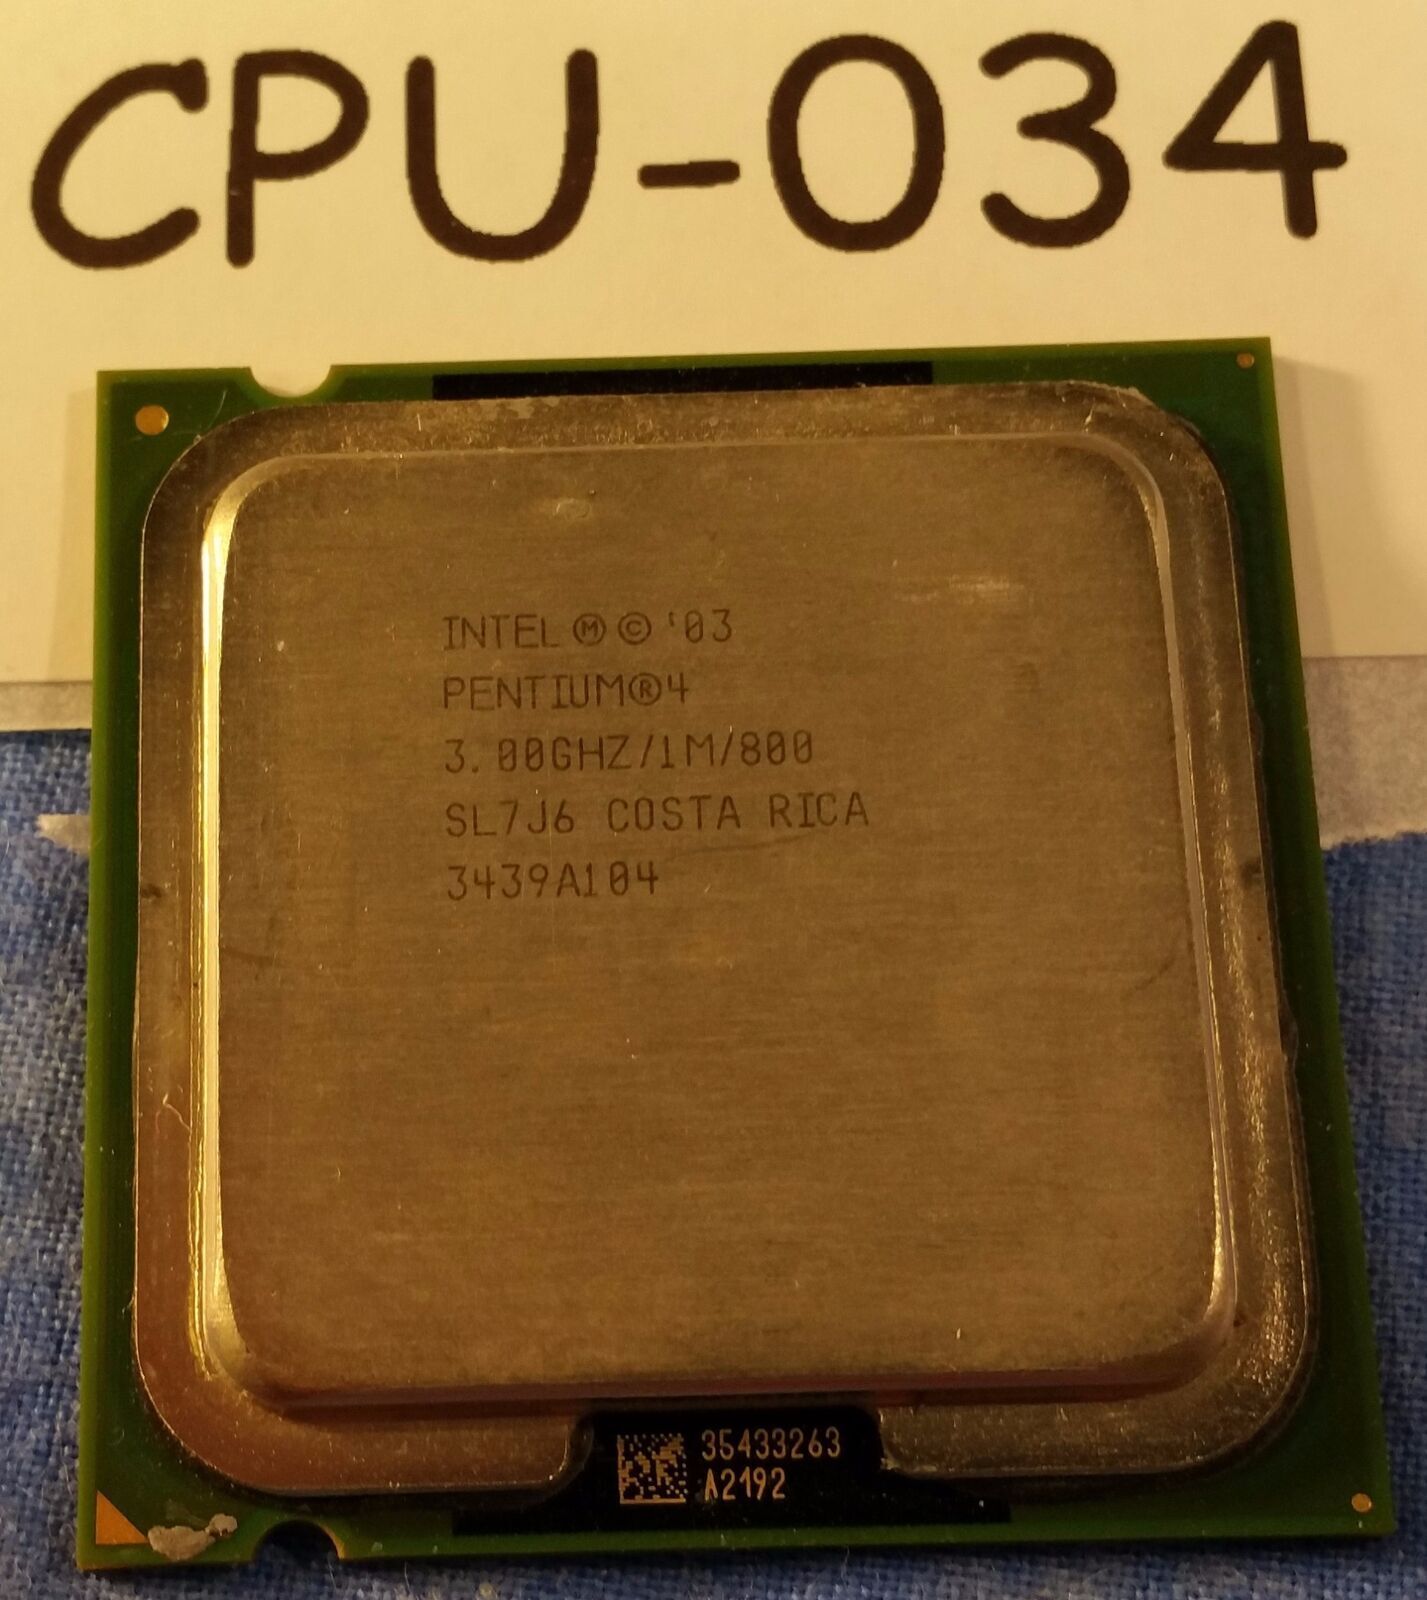 CPU034- SL7J6 Intel Pentium 4 530 3GHz/1M/800MHz Socket 775 Processor  - Used